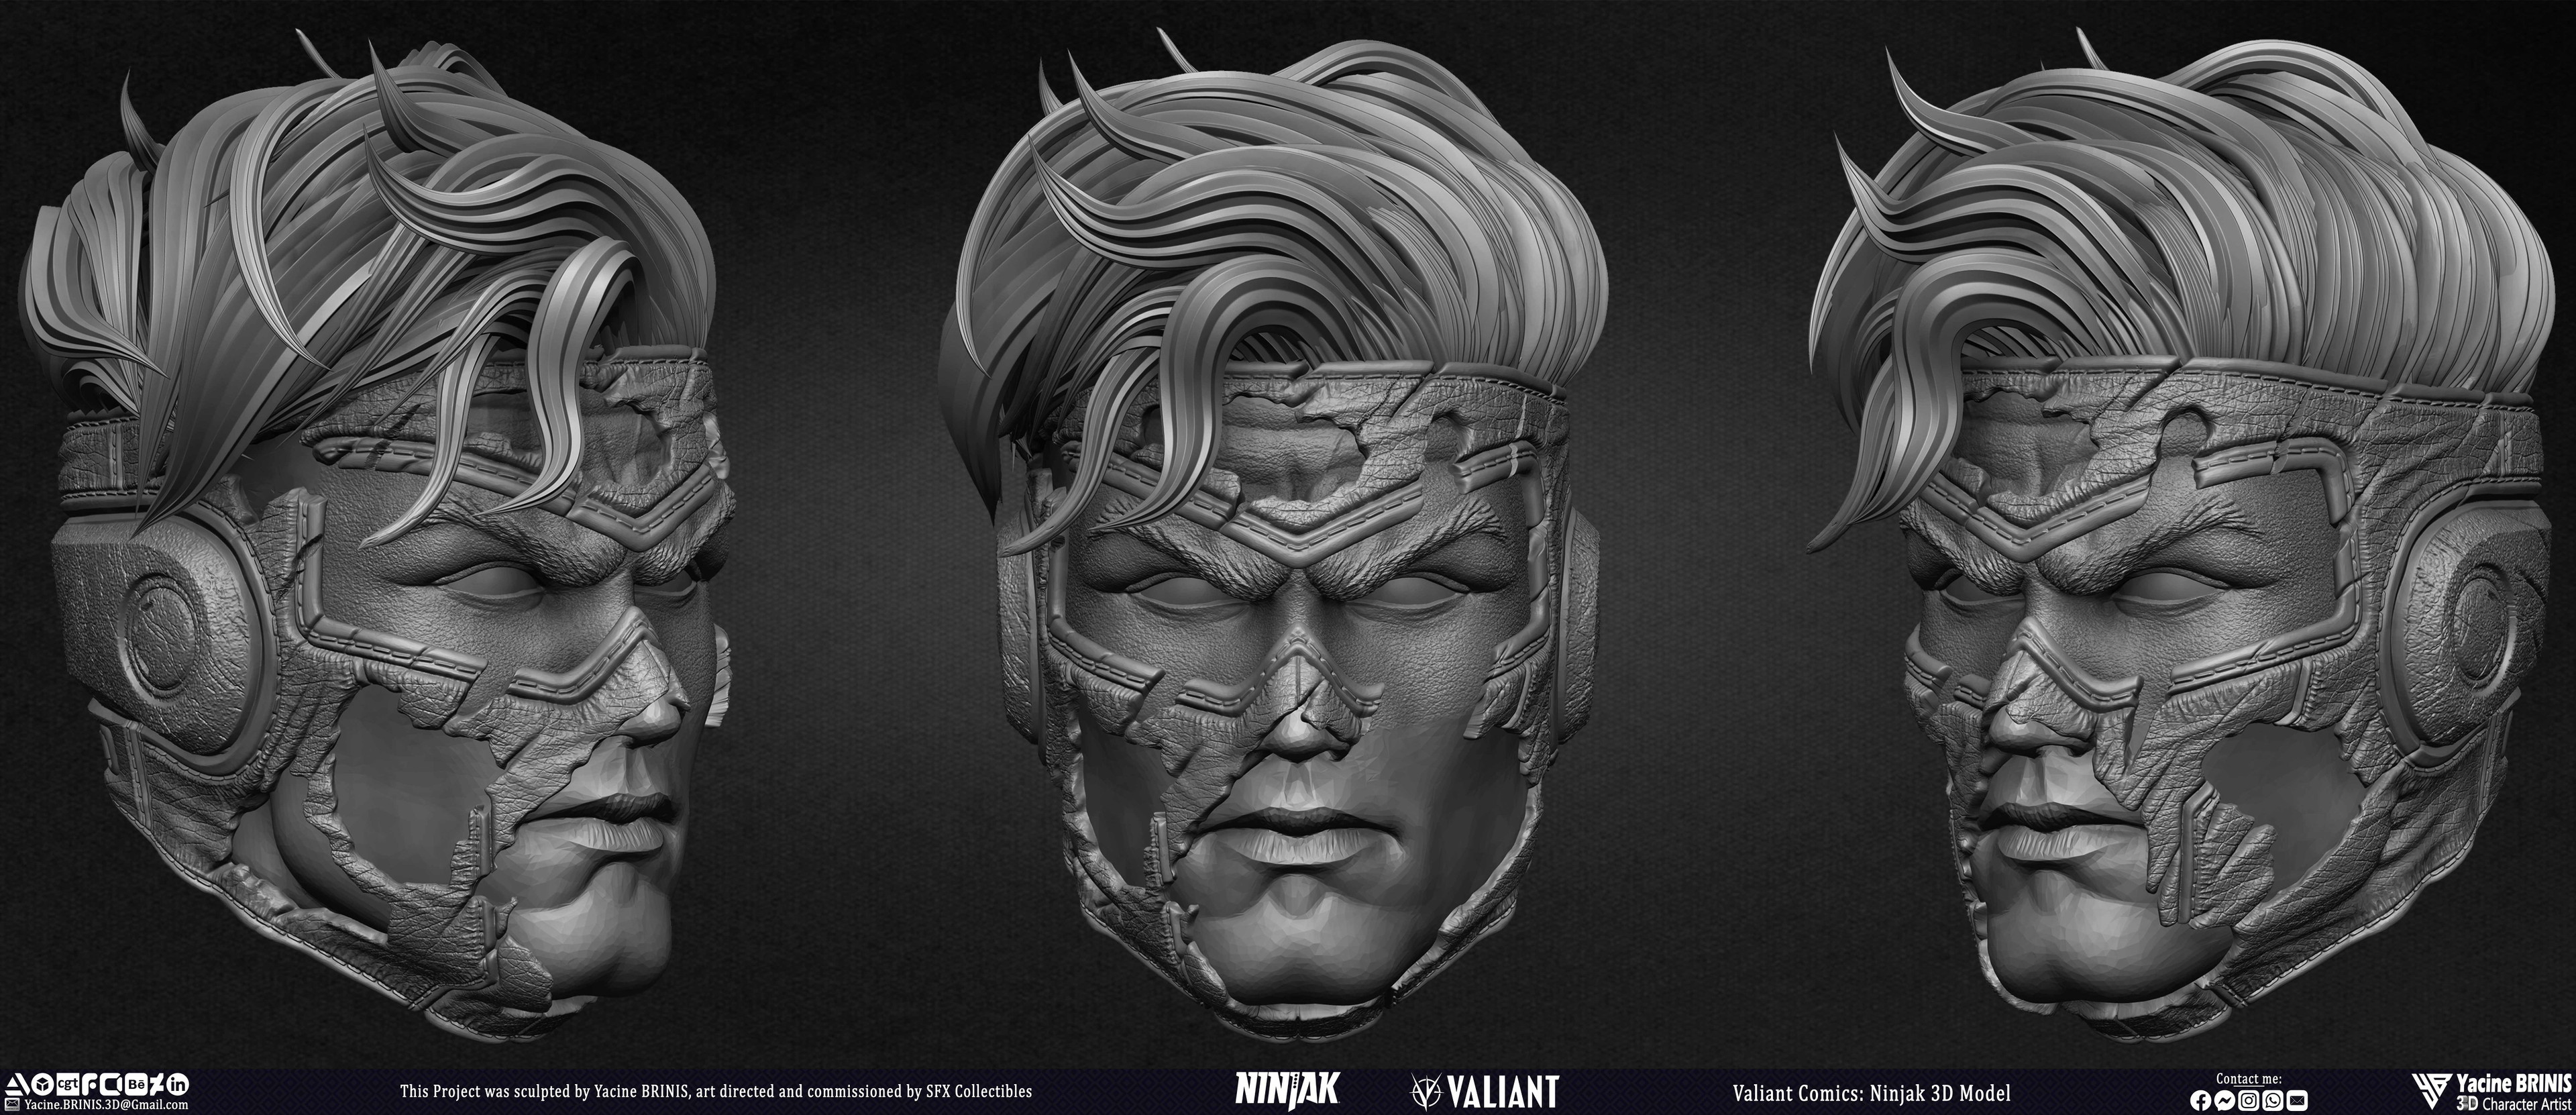 Ninjak Valiant Comics sculpted by Yacine BRINIS 016 Head real time face